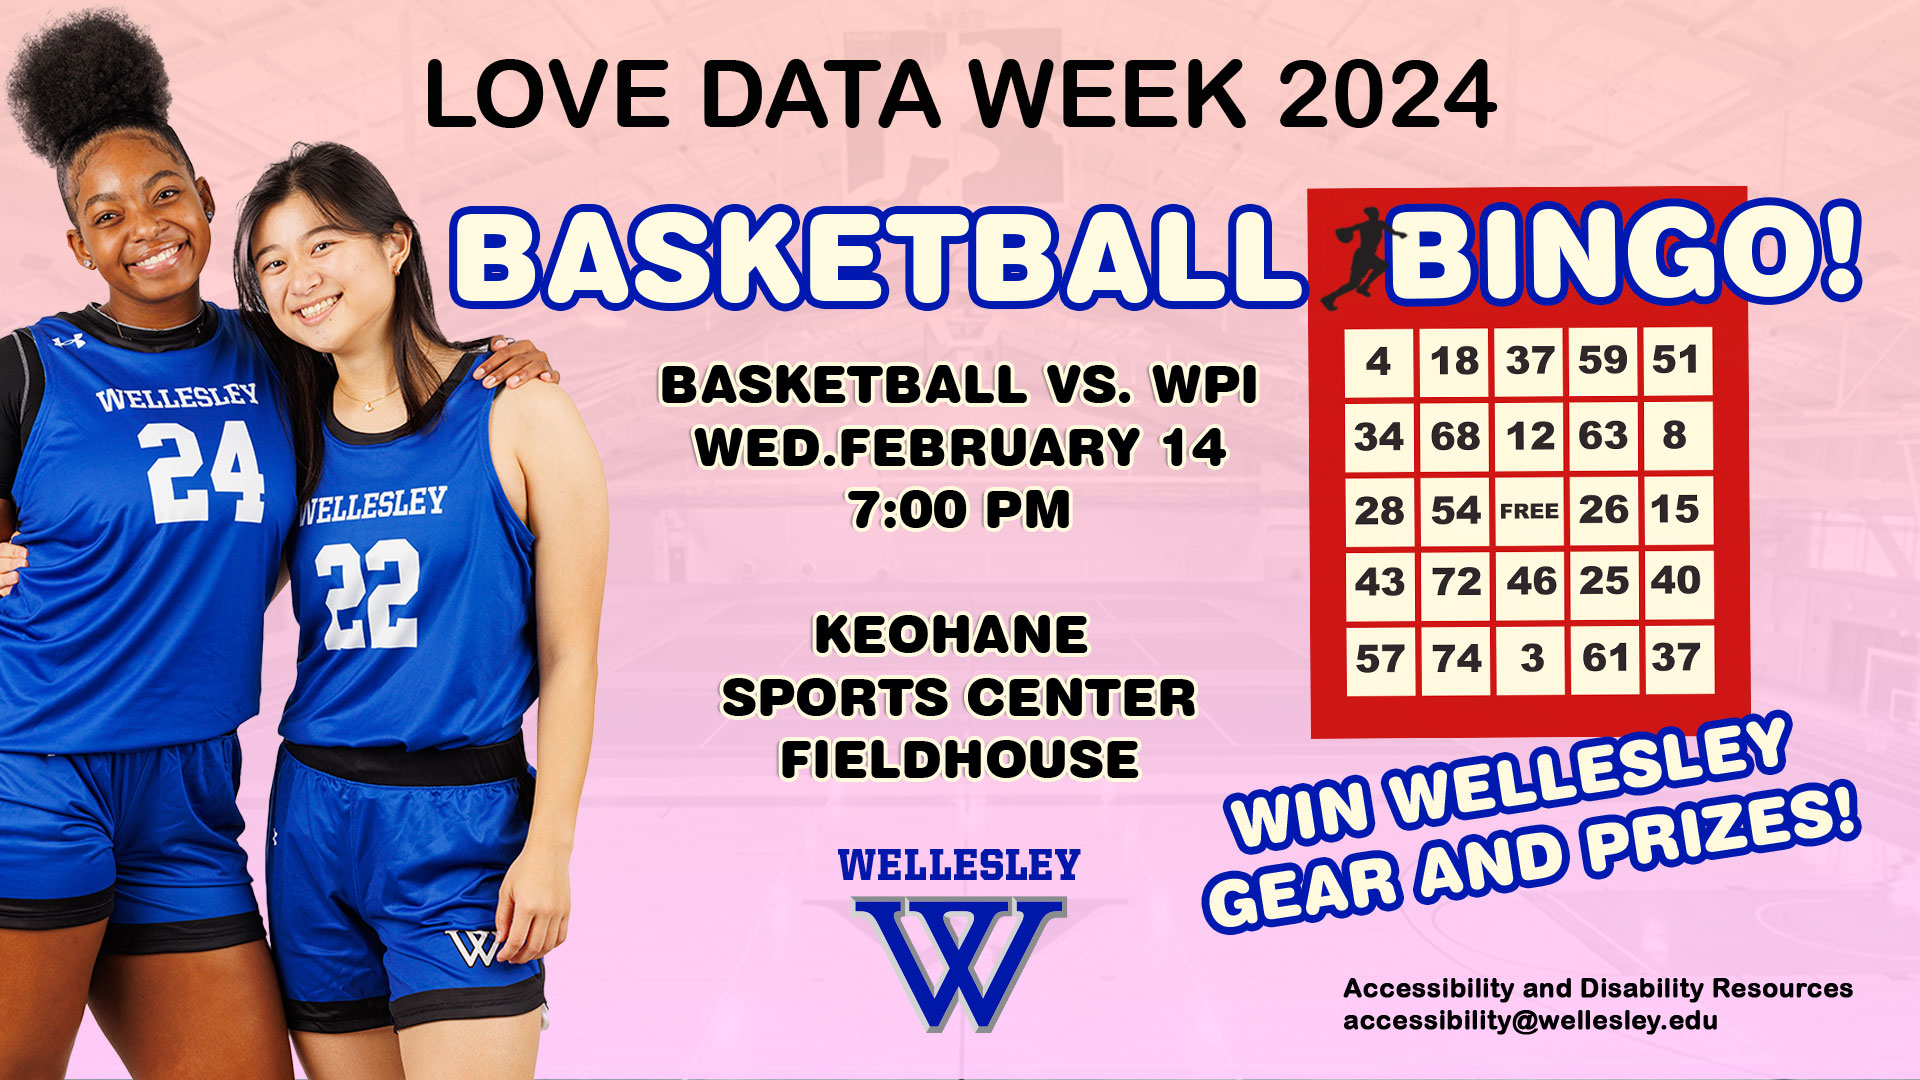 Wellesley Athletics to Host &quot;Basketball Bingo&quot; as Part of Love Data Week